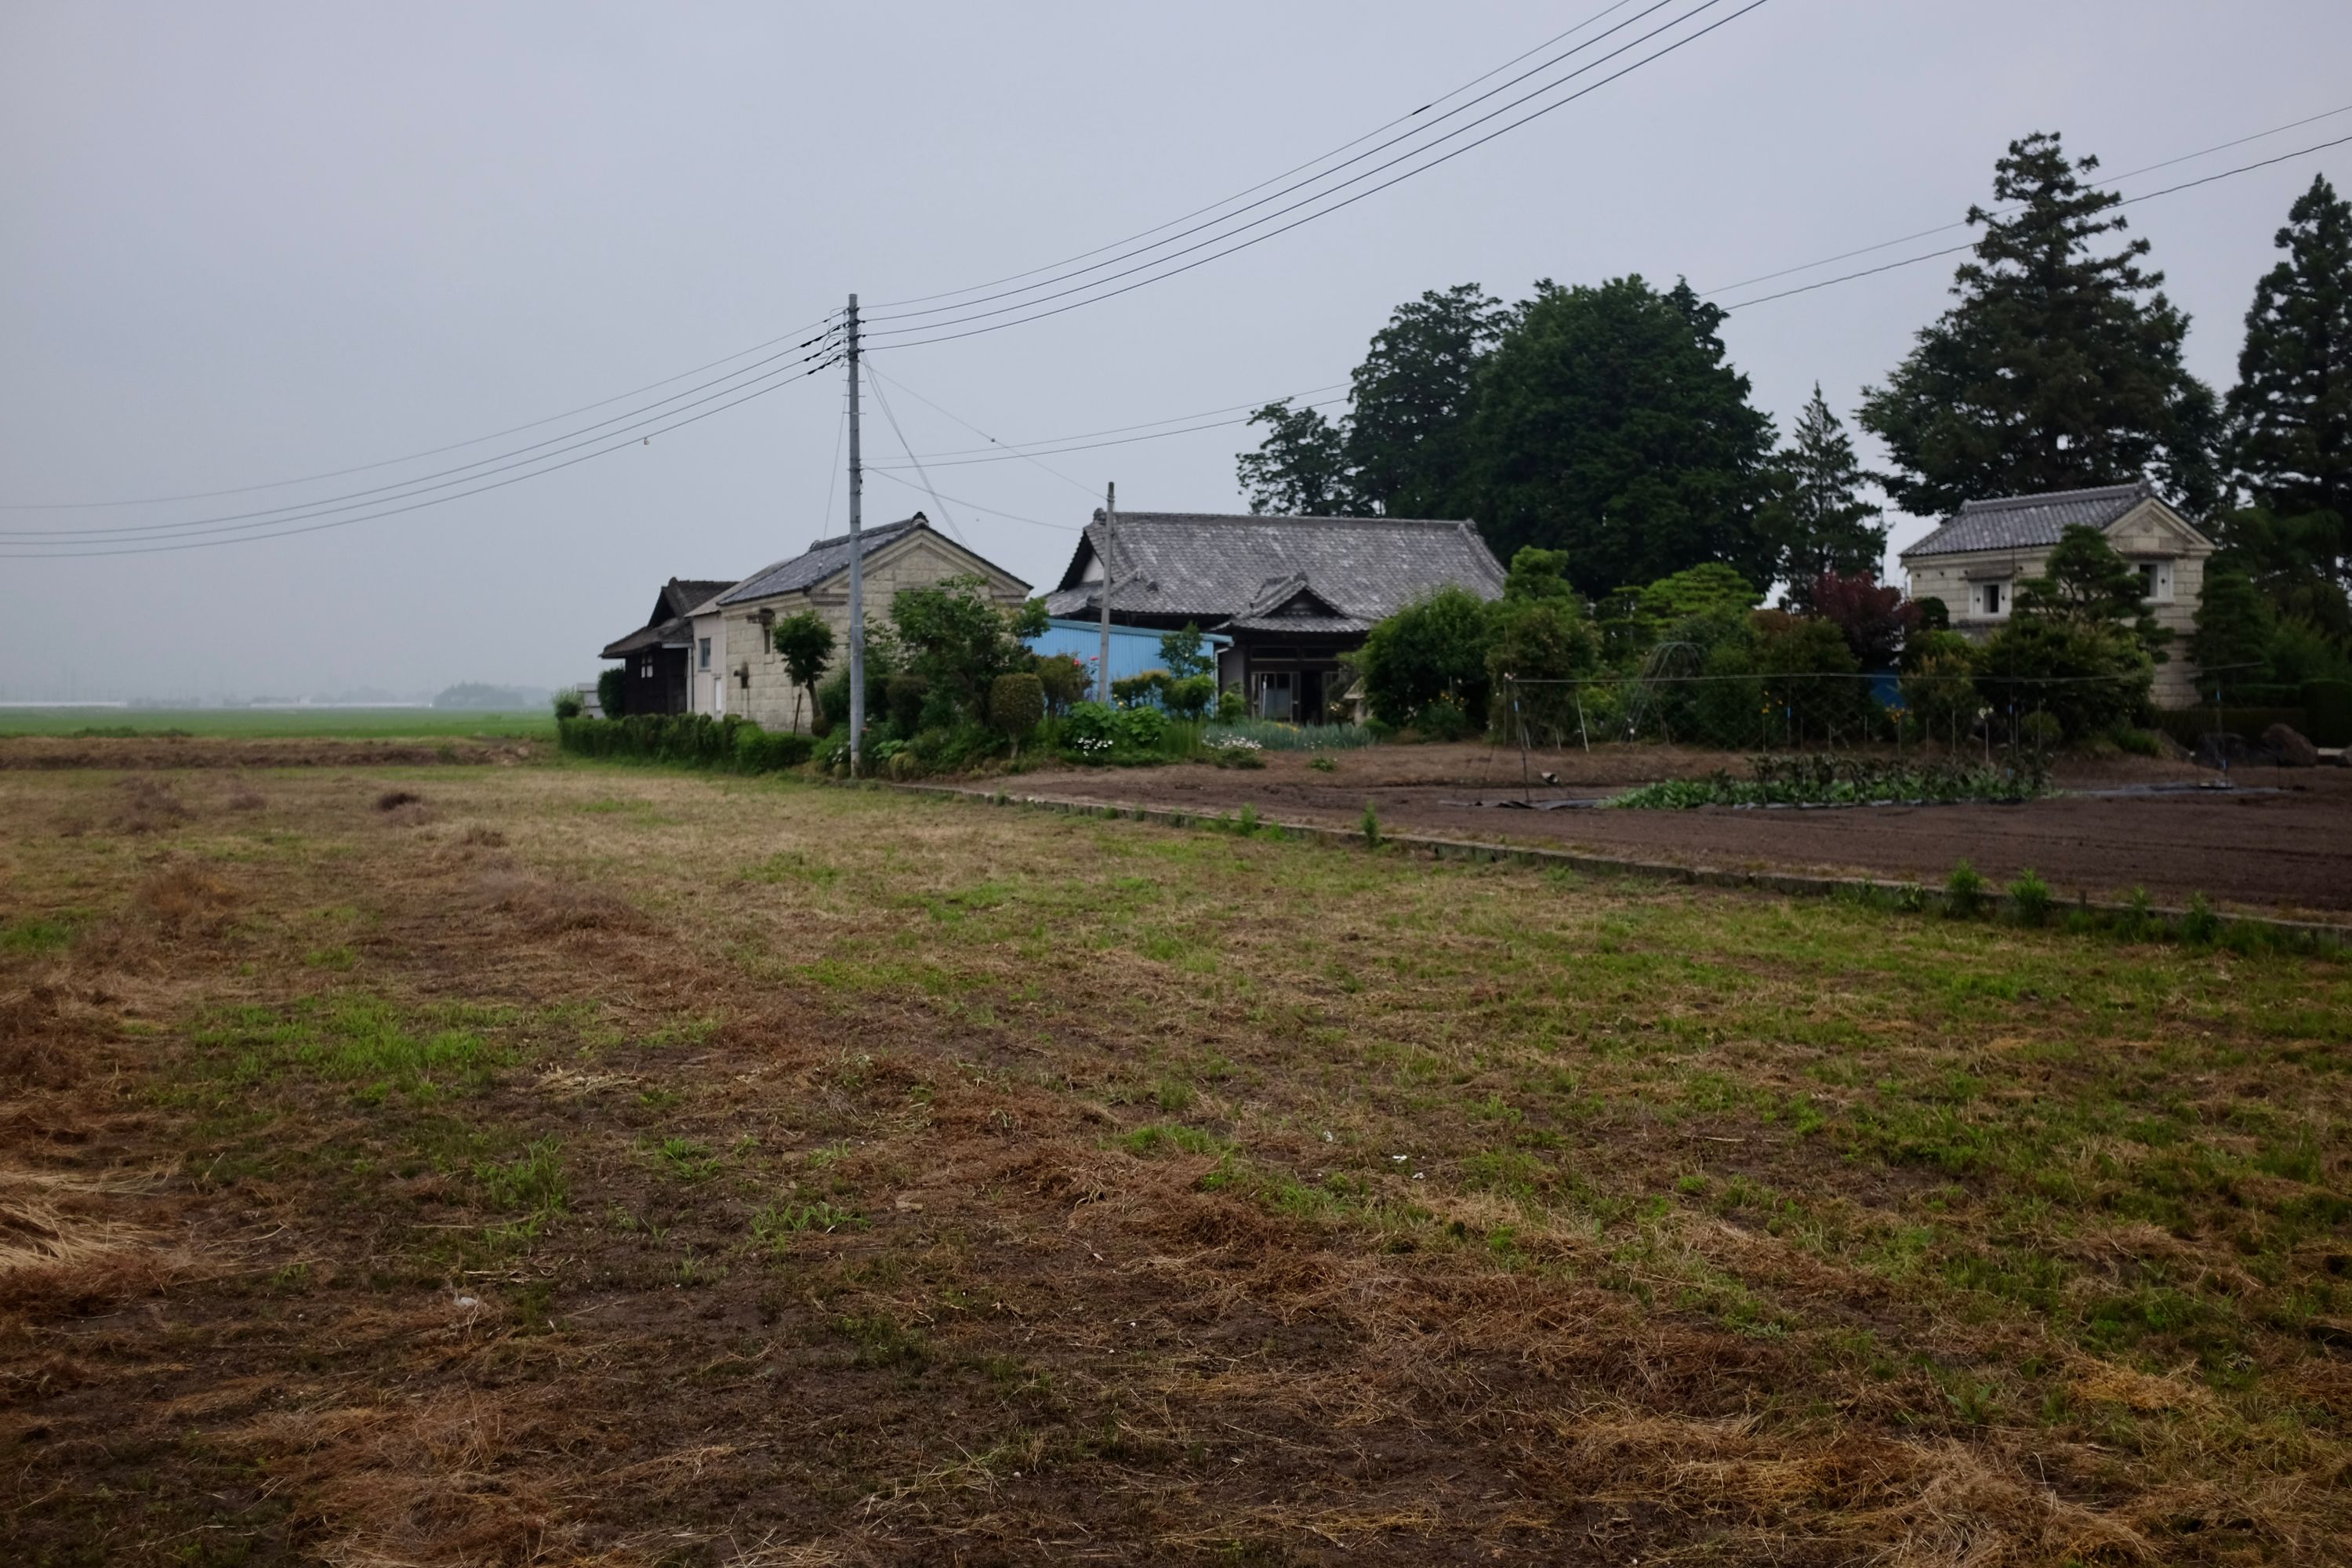 Farmhouses next to fields on an overcast day.